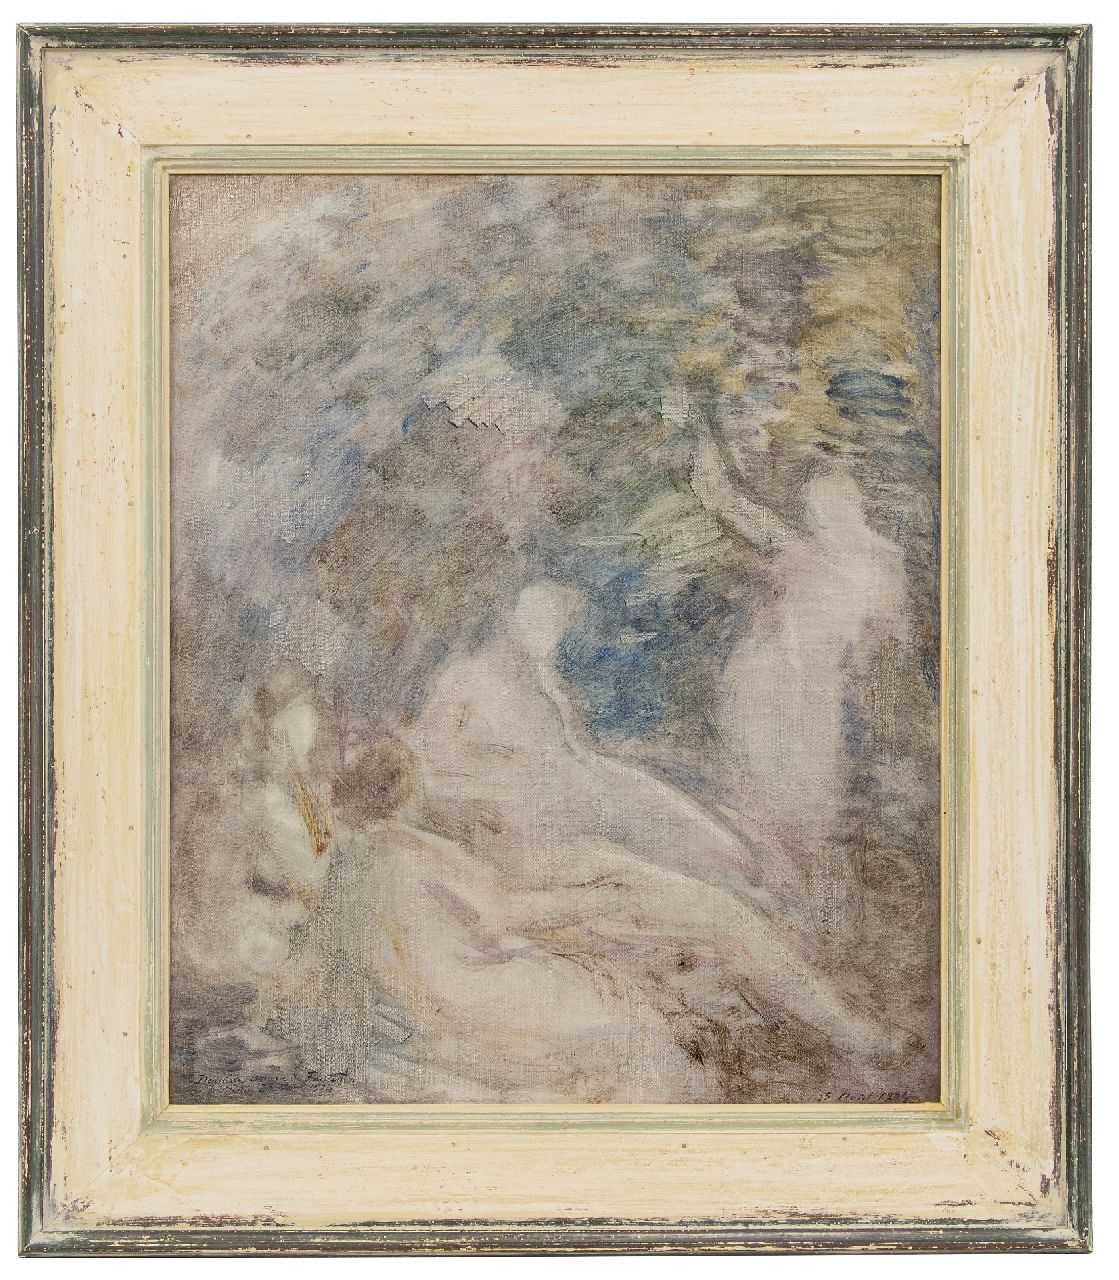 Fantin-Latour I.H.J.T.  | Ignace 'Henri' Jean Théodore Fantin-Latour | Gemälde zum Verkauf angeboten | Trois baigneuses, Öl auf Leinwand 65,1 x 54,0 cm, datiert 25. Aug. 1904